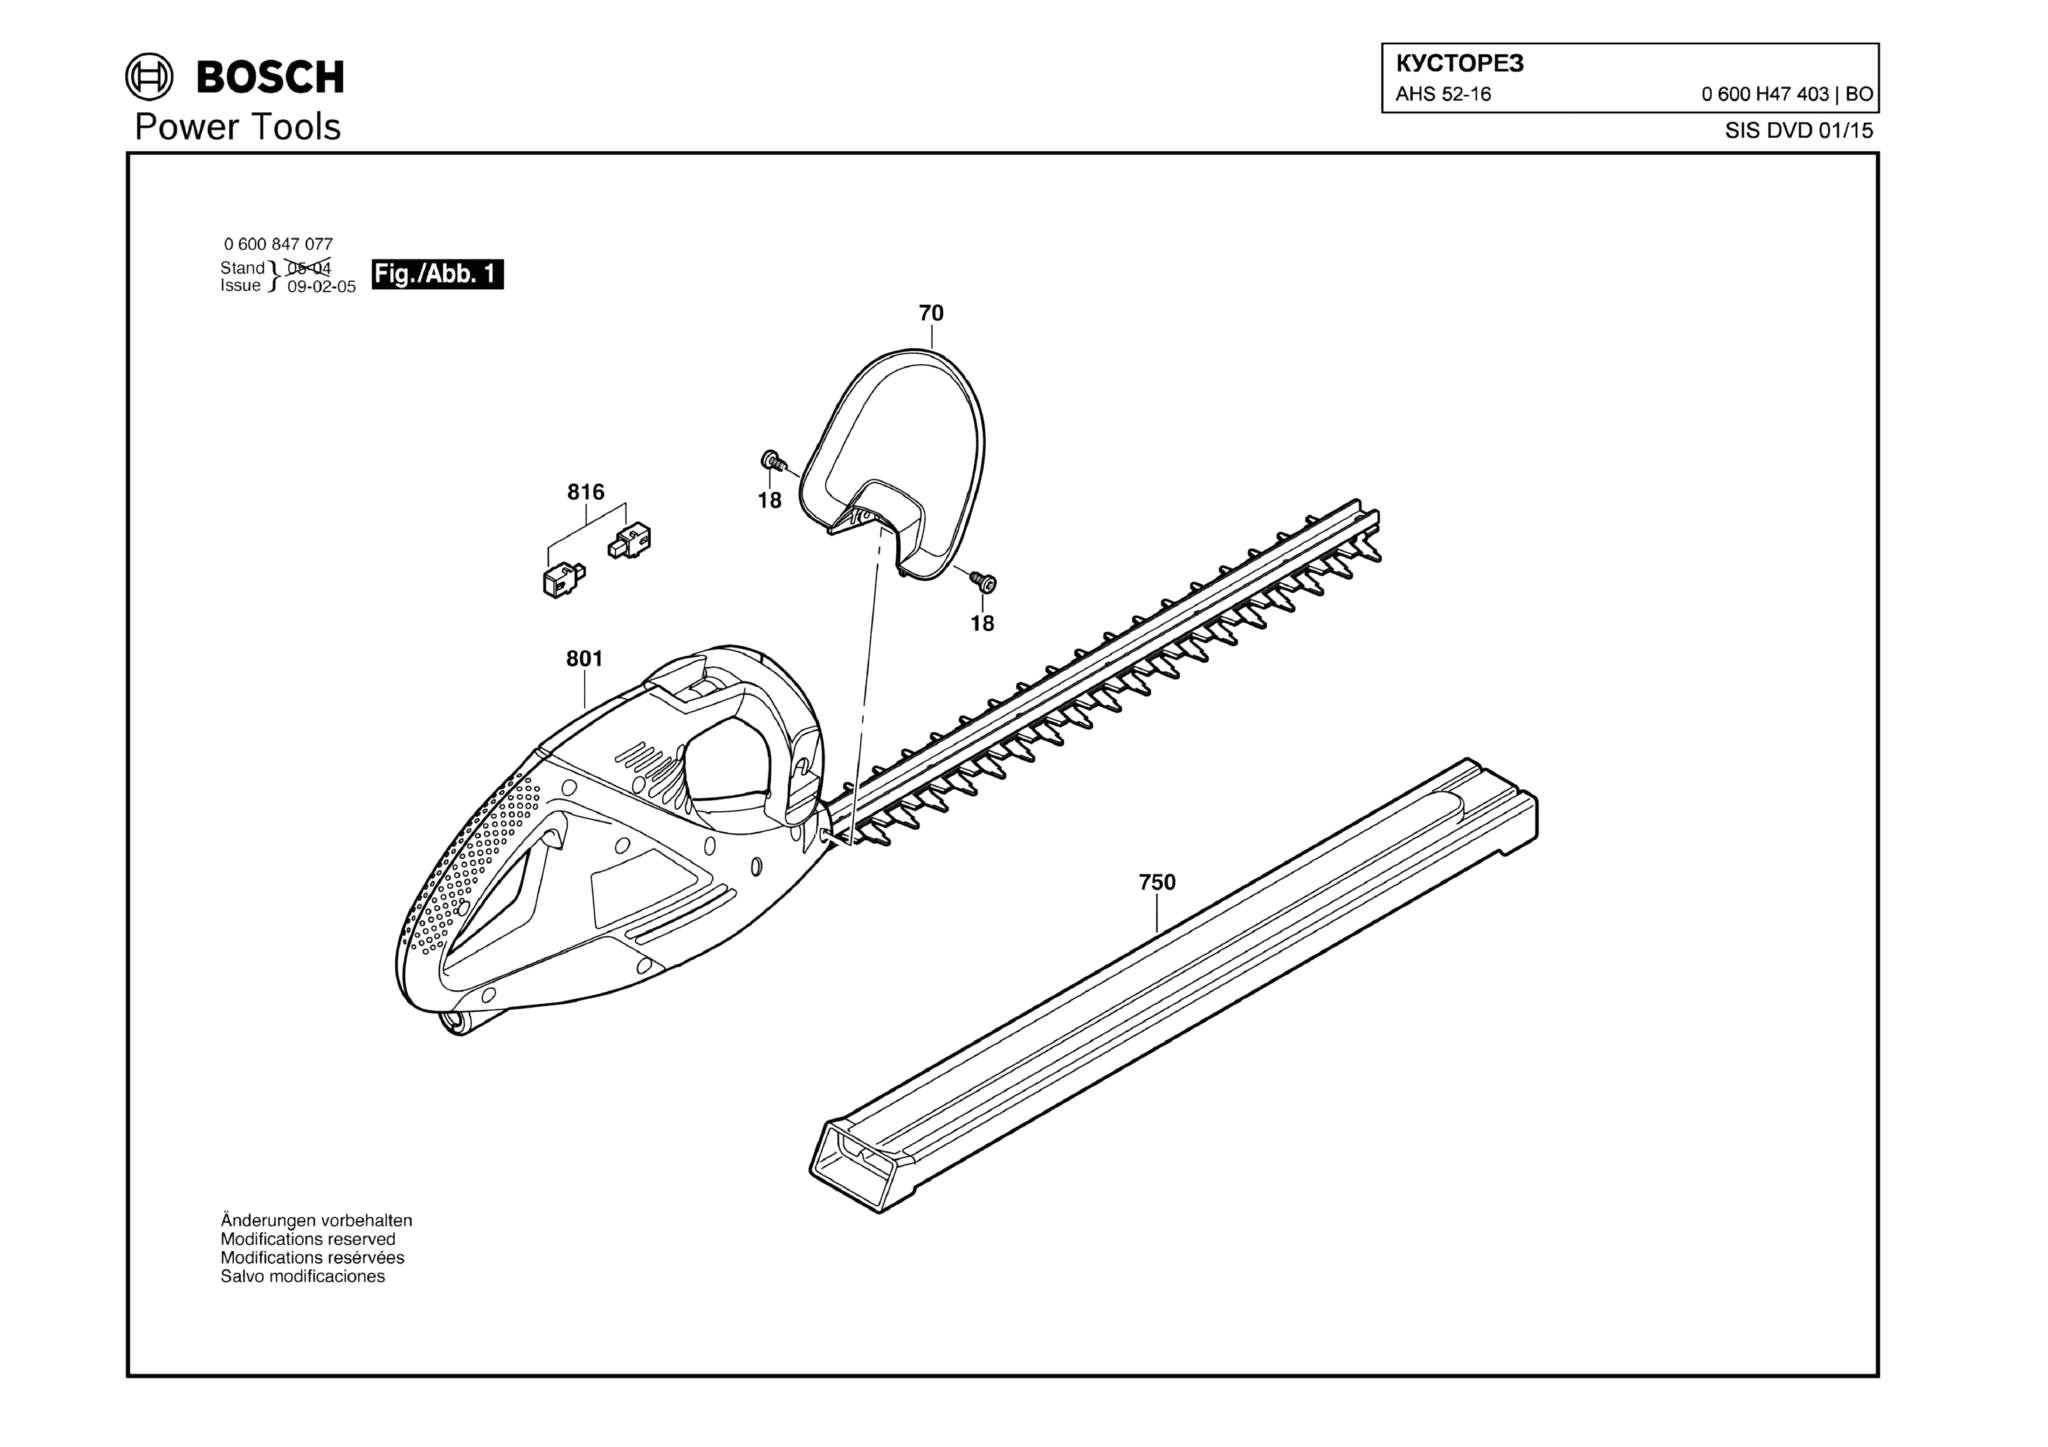 Запчасти, схема и деталировка Bosch AHS 52-16 (ТИП 0600H47403)